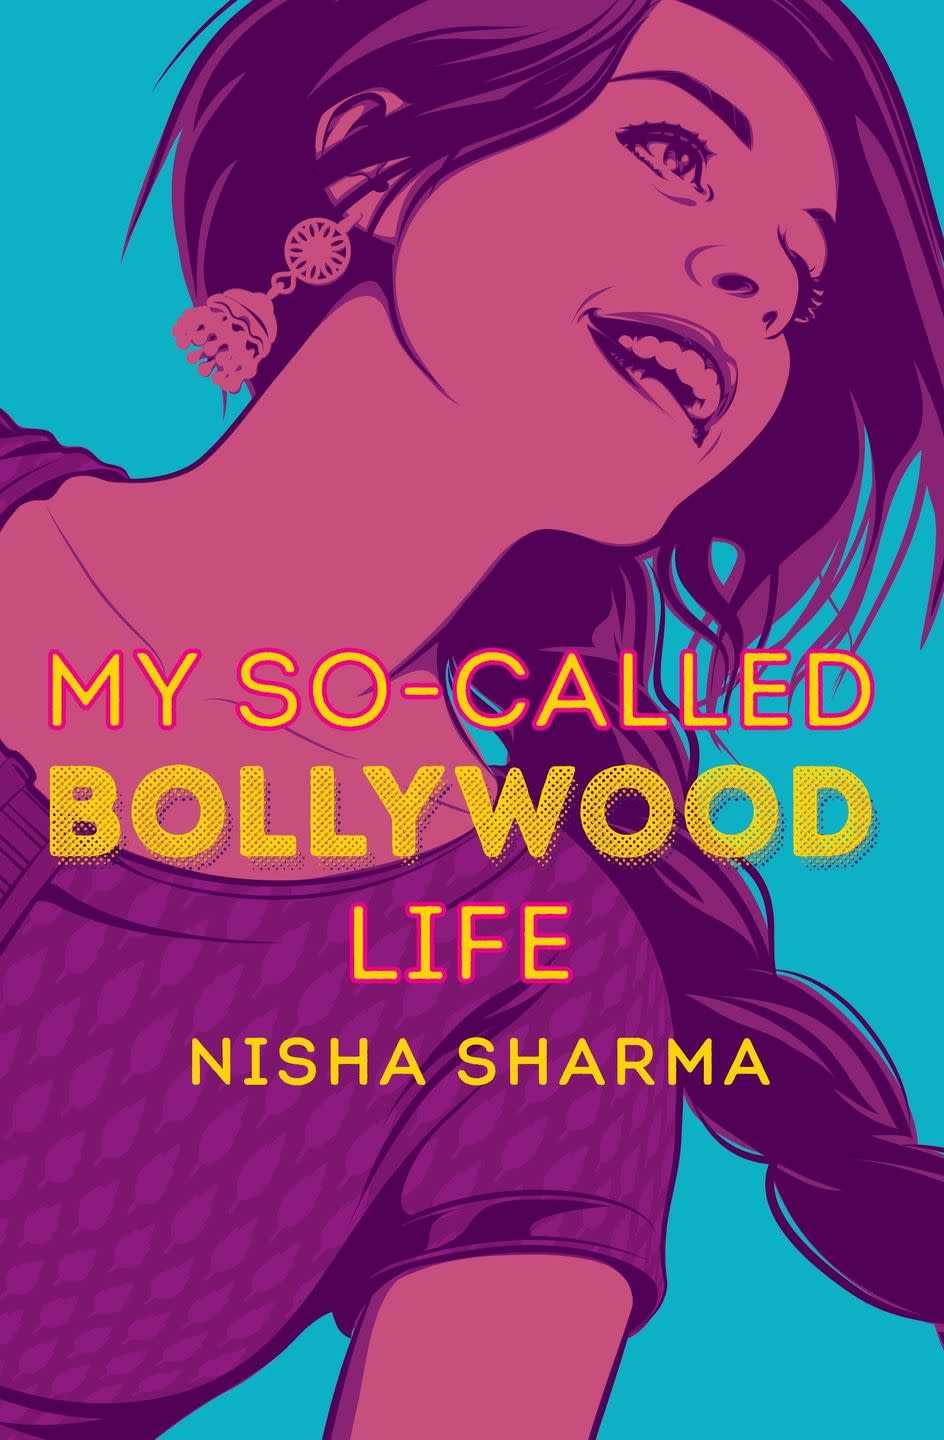 21) “My So Called Bollywood Life” by Nisha Sharma